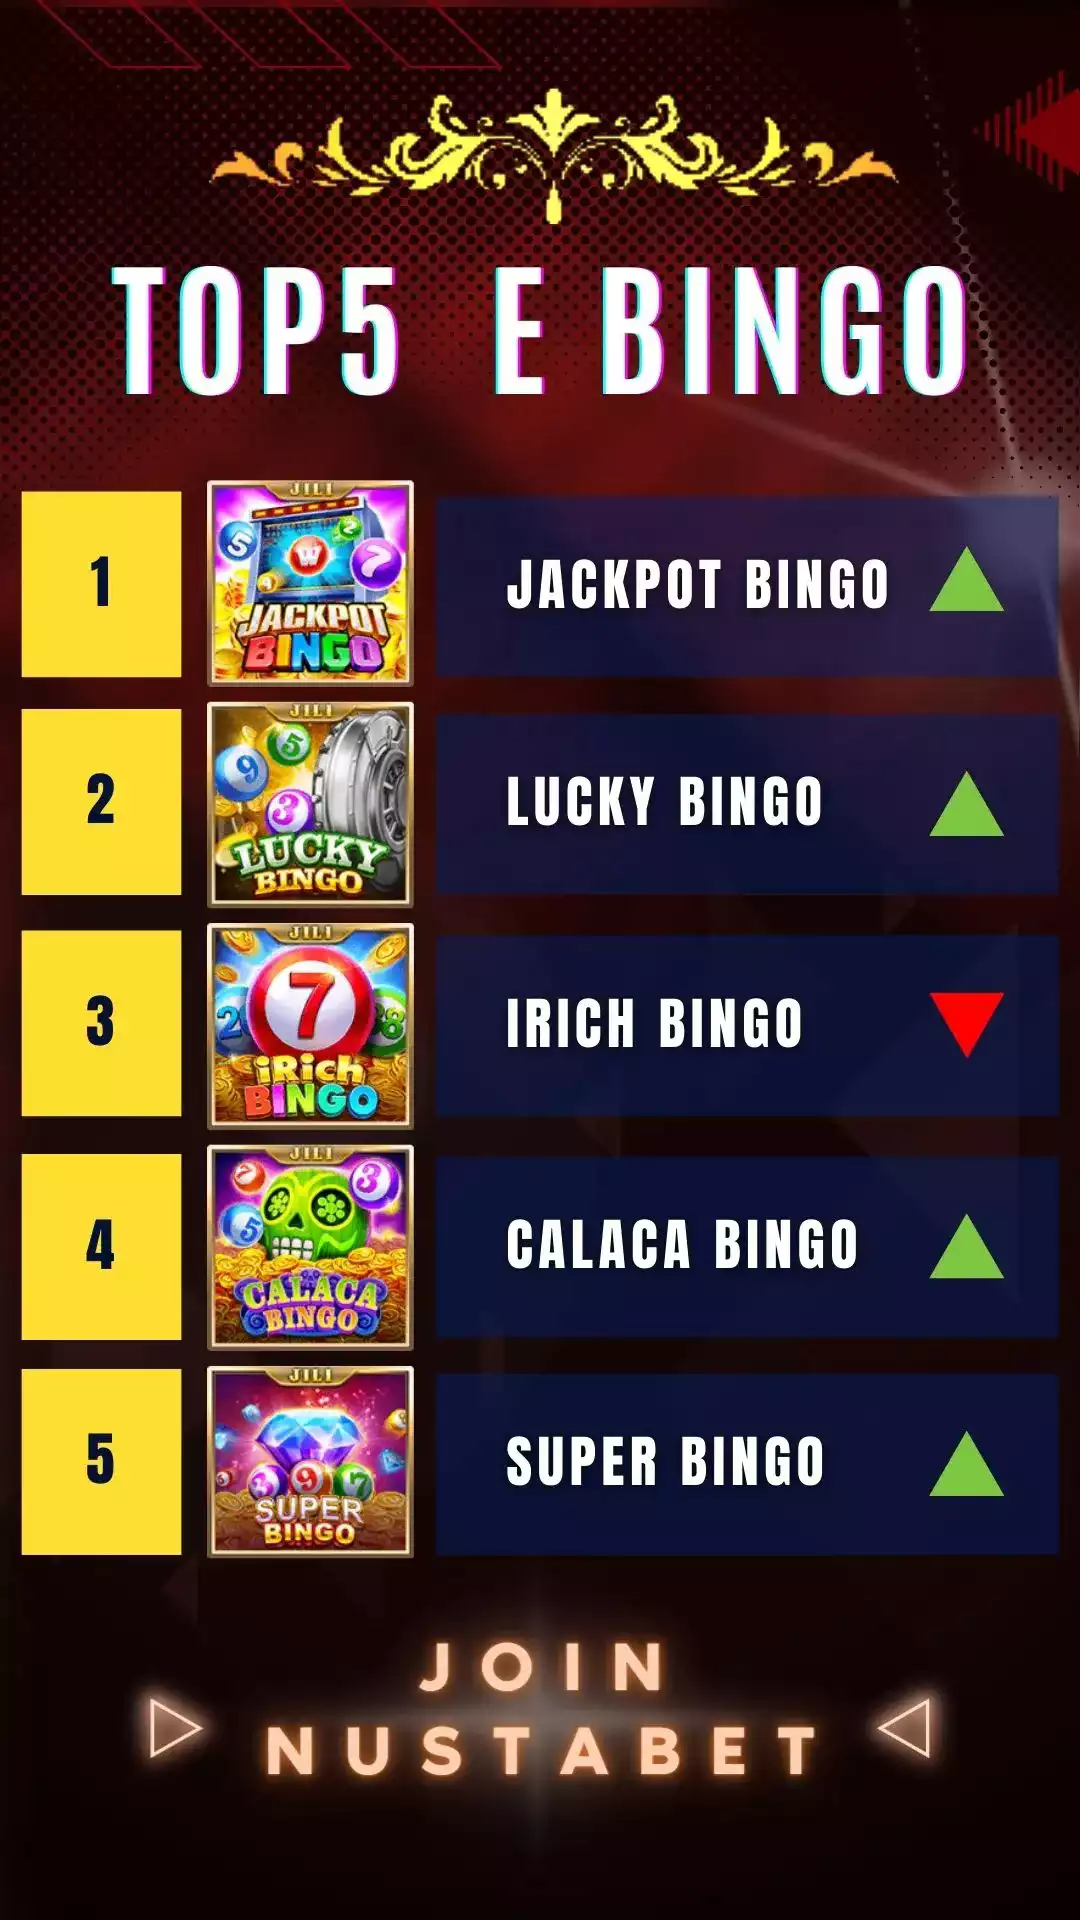 Top 5 E Bingo Real Money Philippines | Nustabet Online Casino